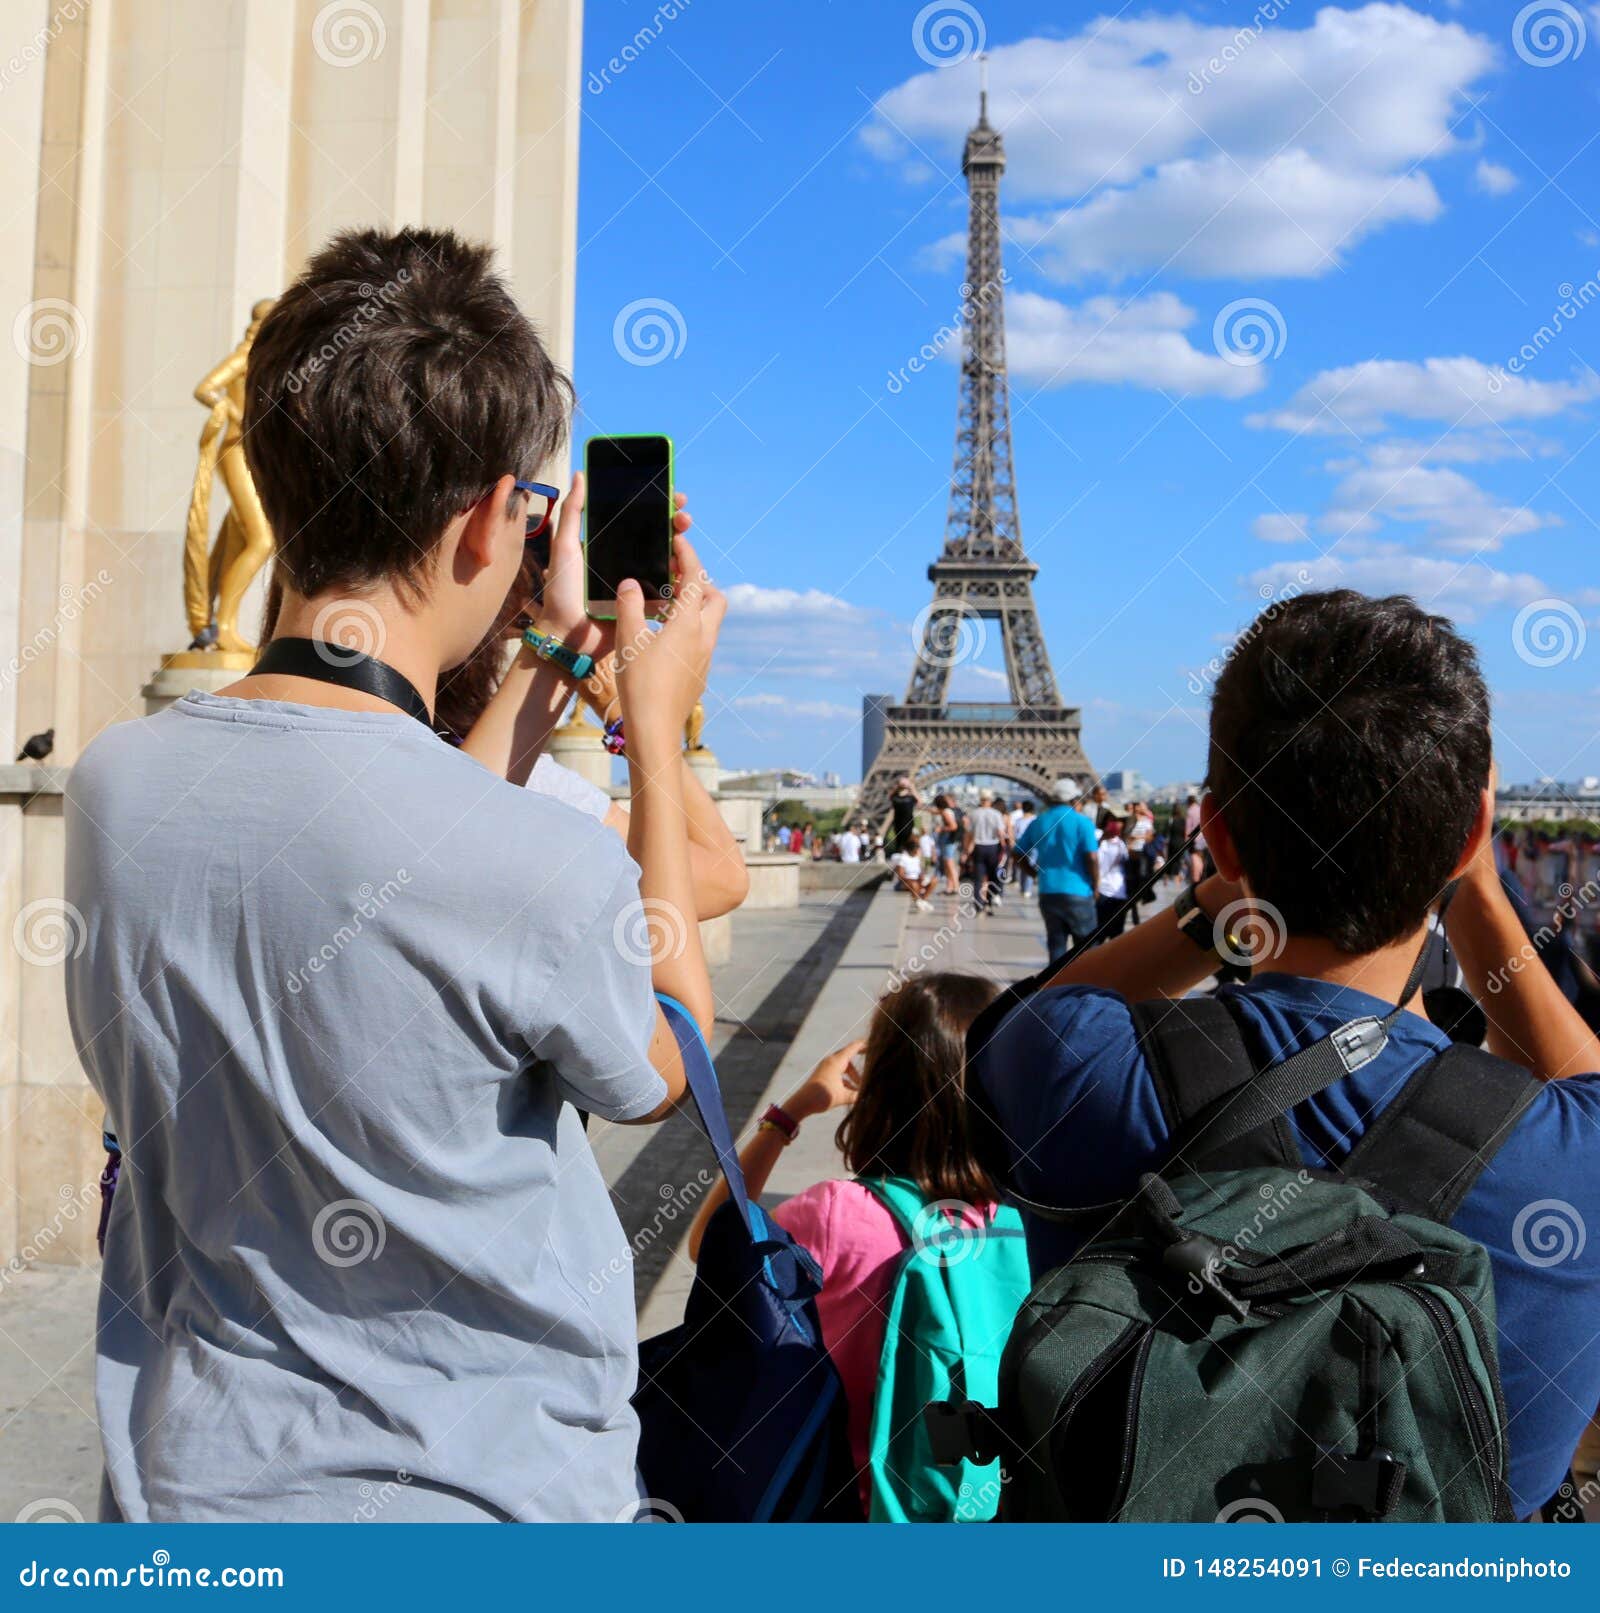 paris travel tourists